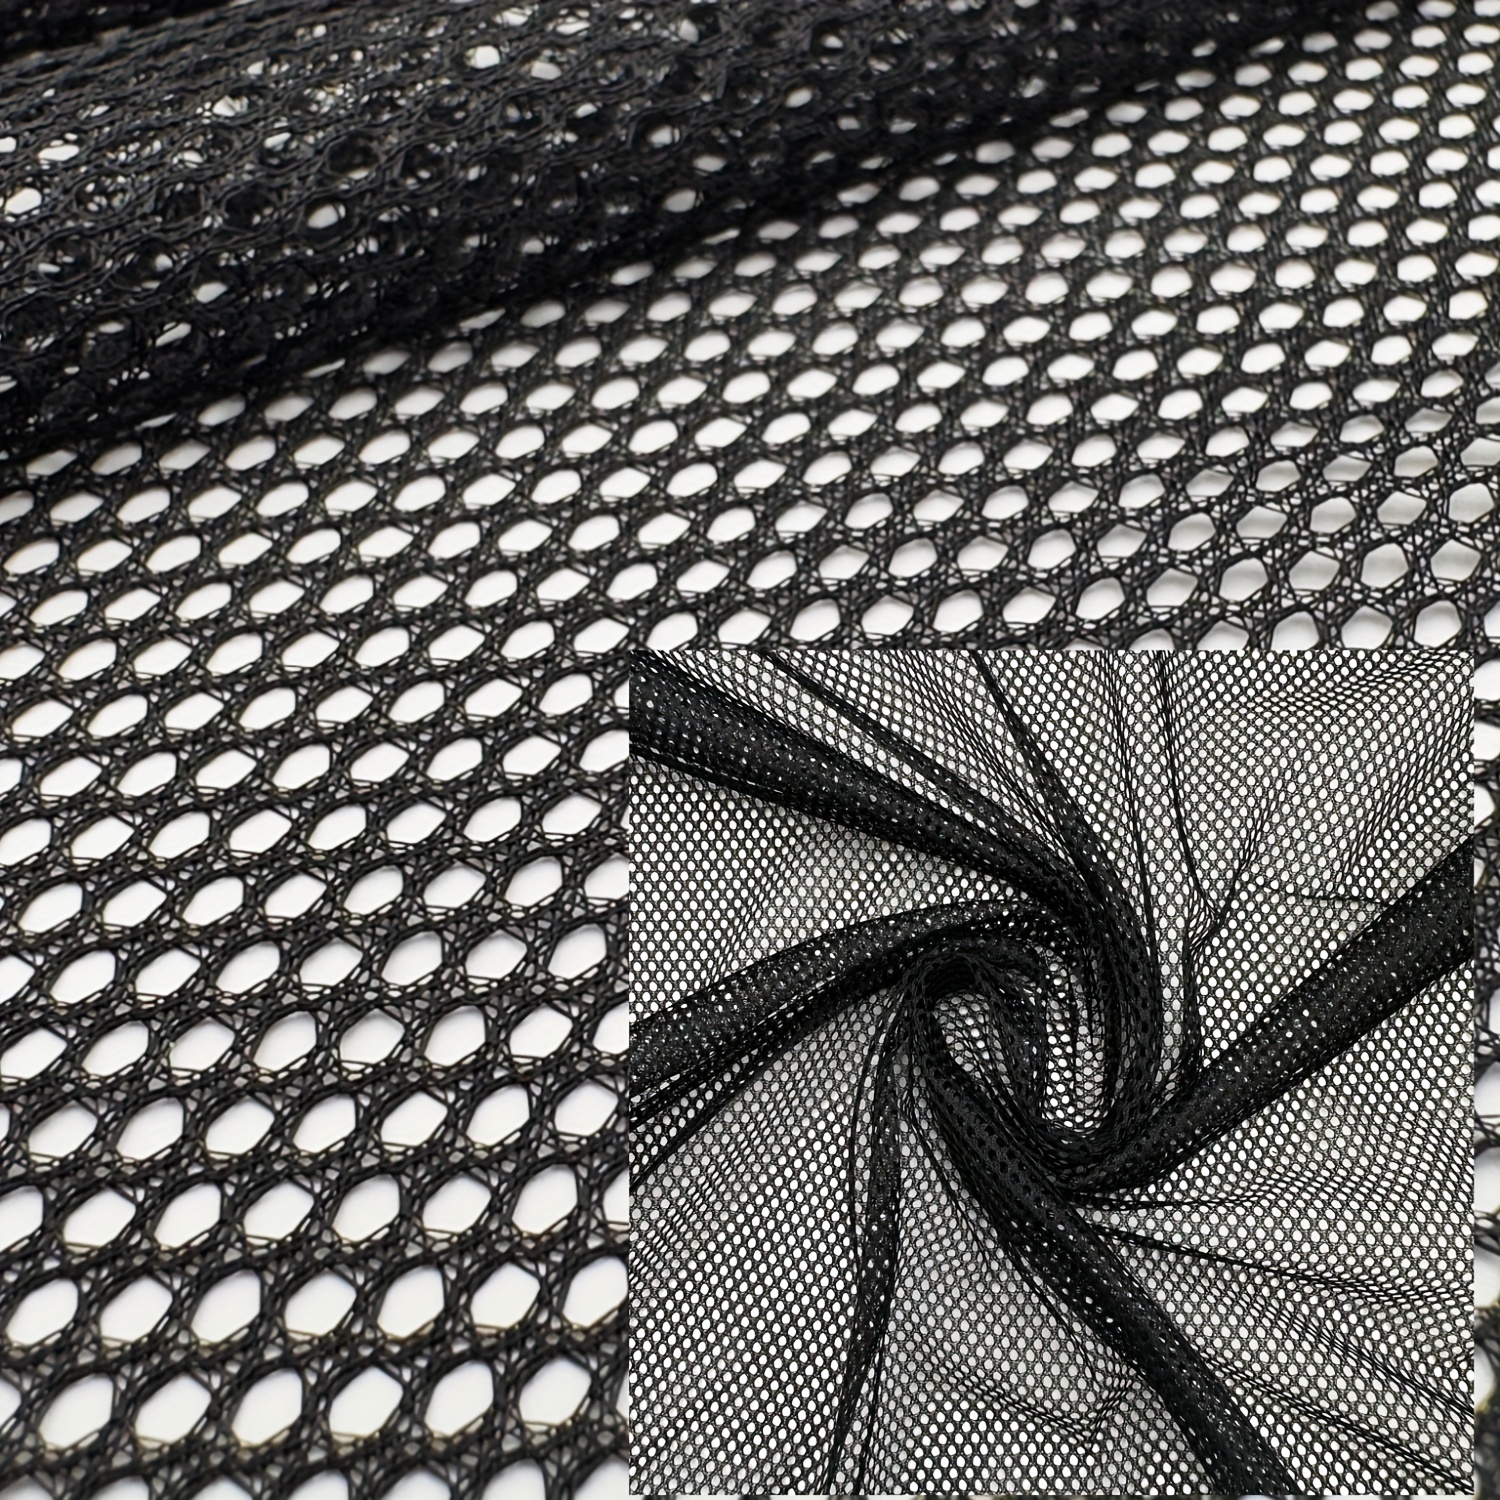 Black Fabric Mesh Fabric Polyamide Fishnet Fabric Soft Clothing Fabric  Apparel Fabric Fashion Fabric Crafts Fabric Fabric By The Meter